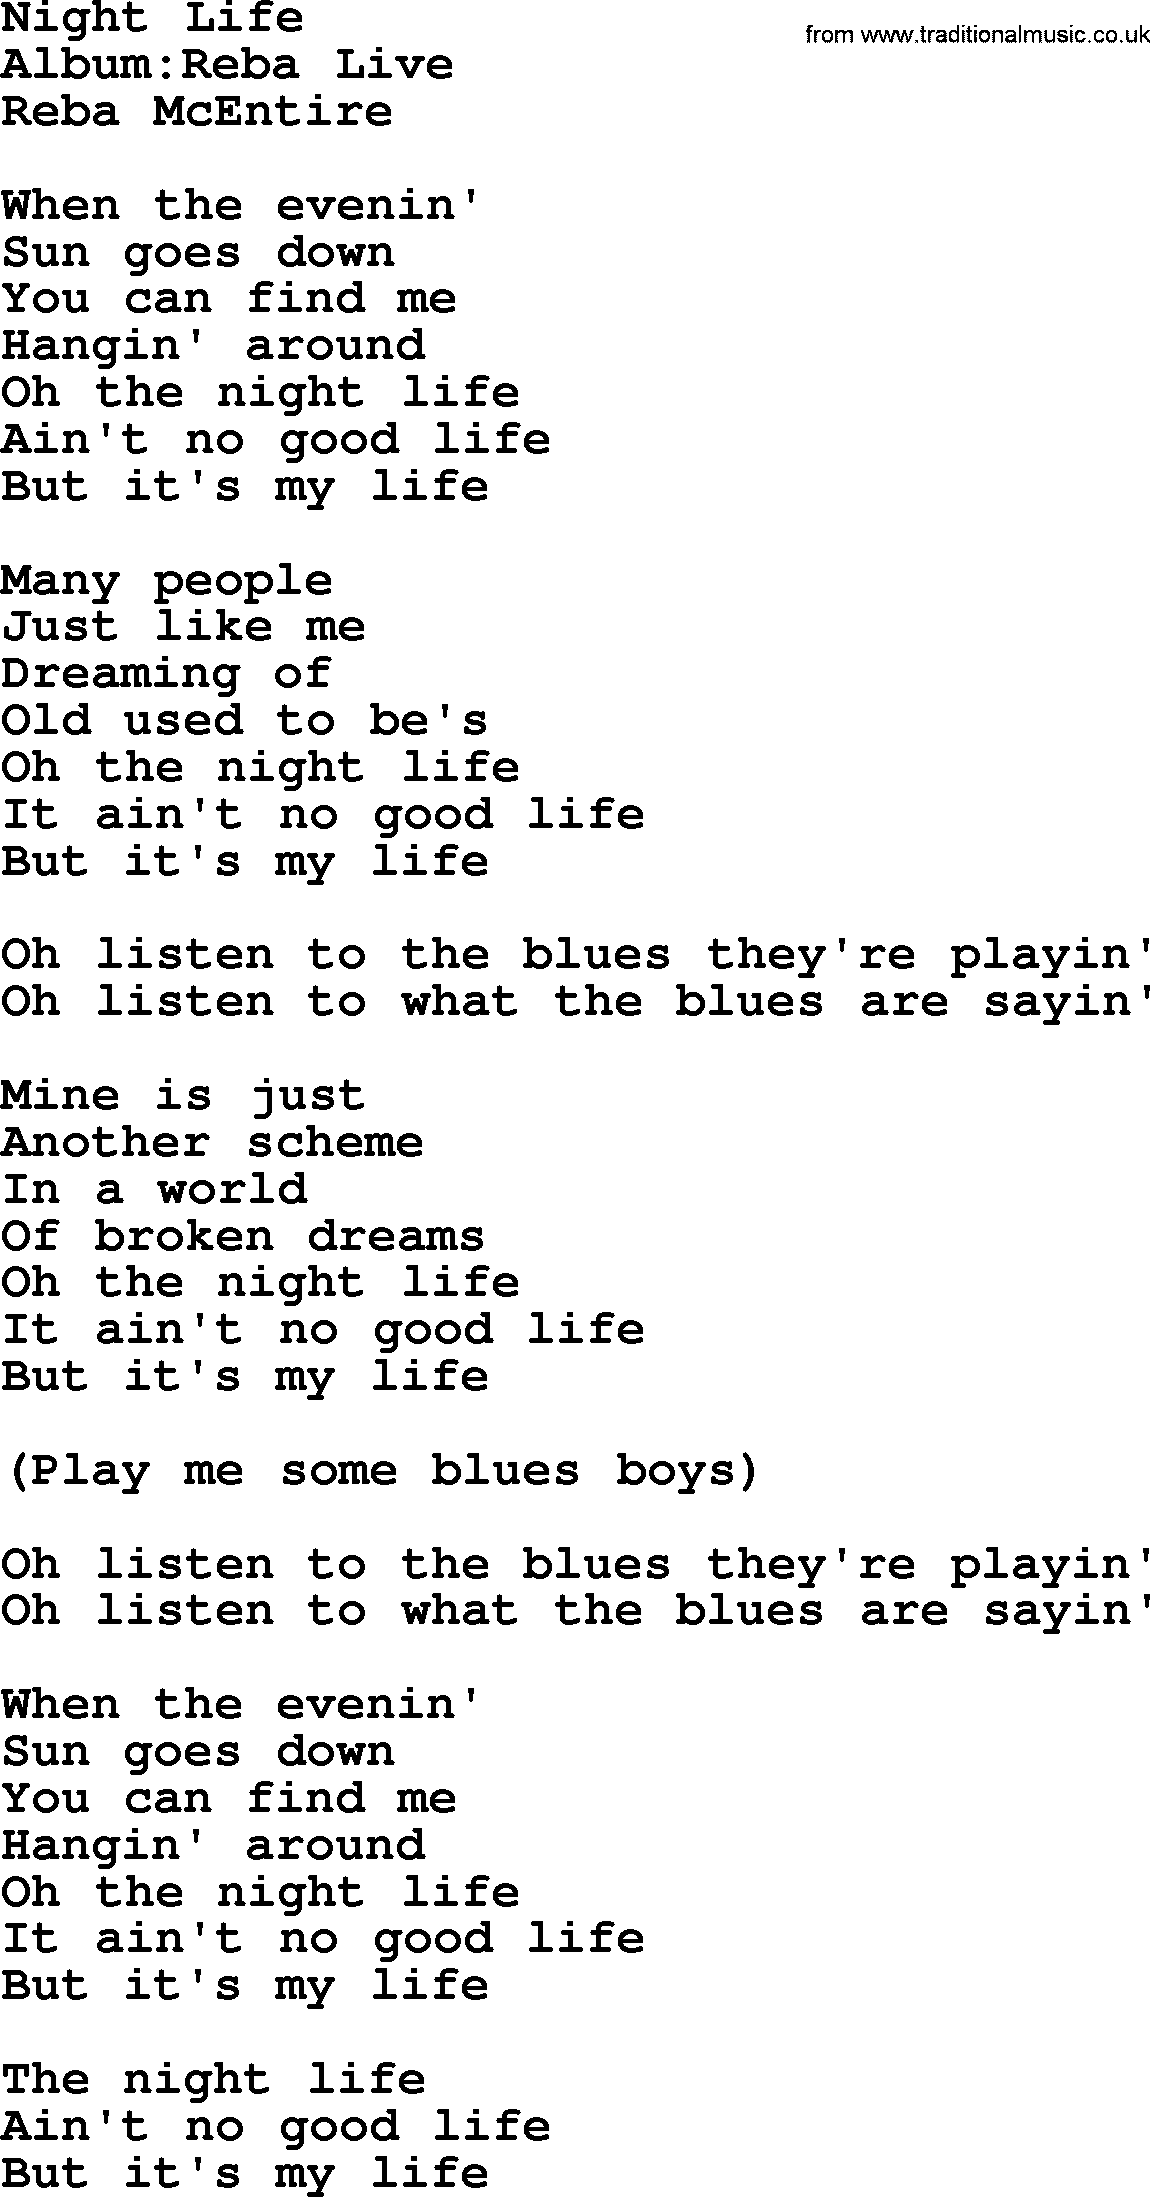 Reba McEntire song: Night Life lyrics